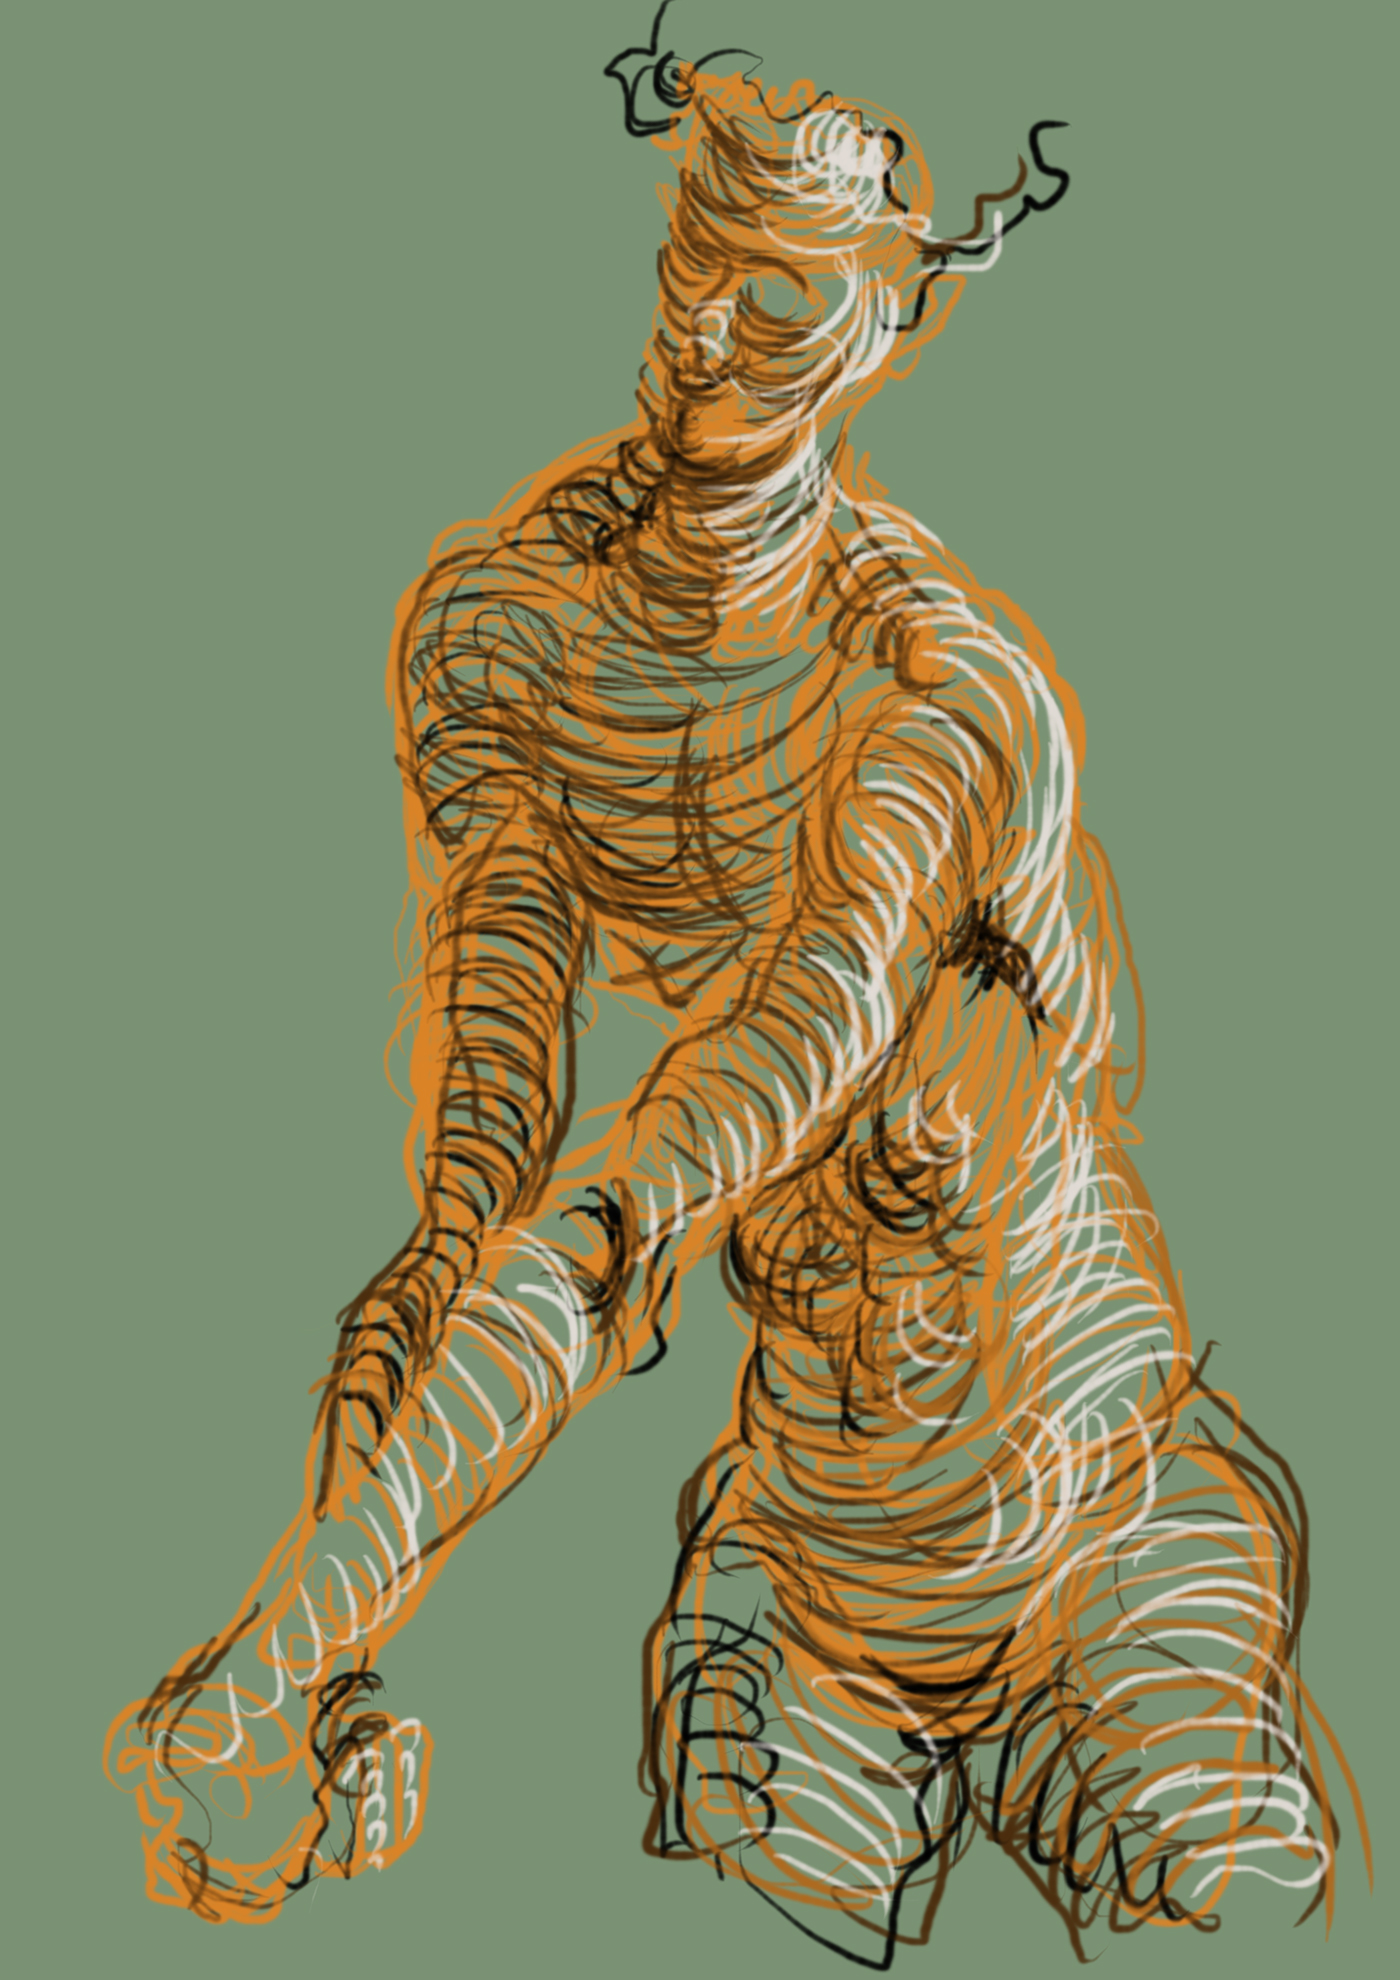 Digital Art  ILLUSTRATION  Drawing  body monochrome fine art line art Form concept